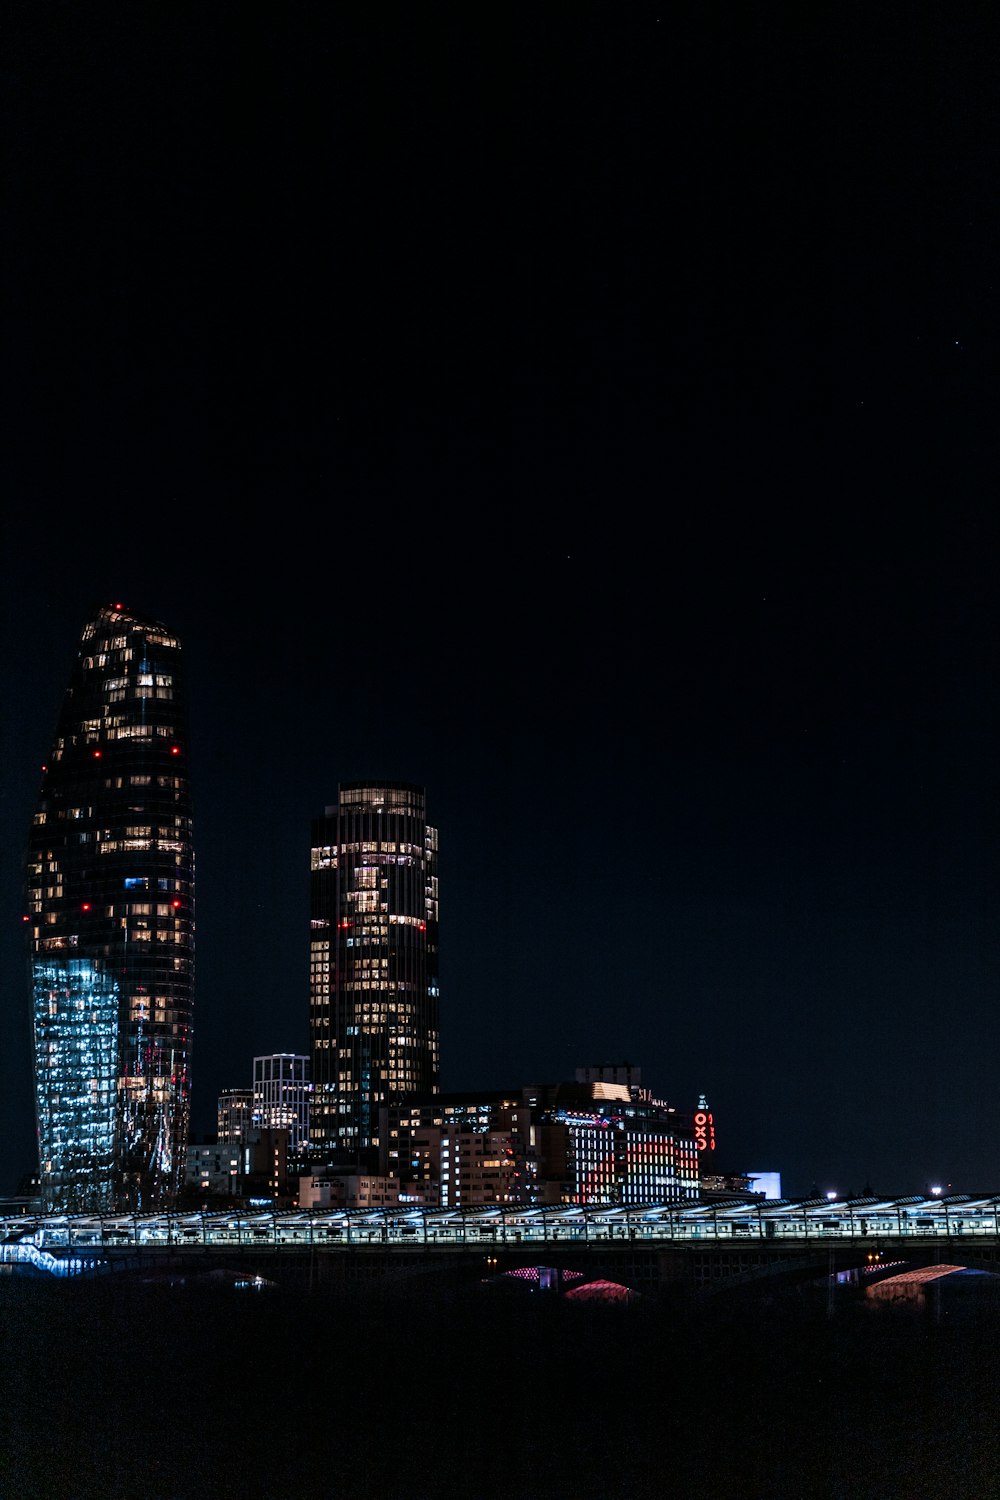 a city skyline at night